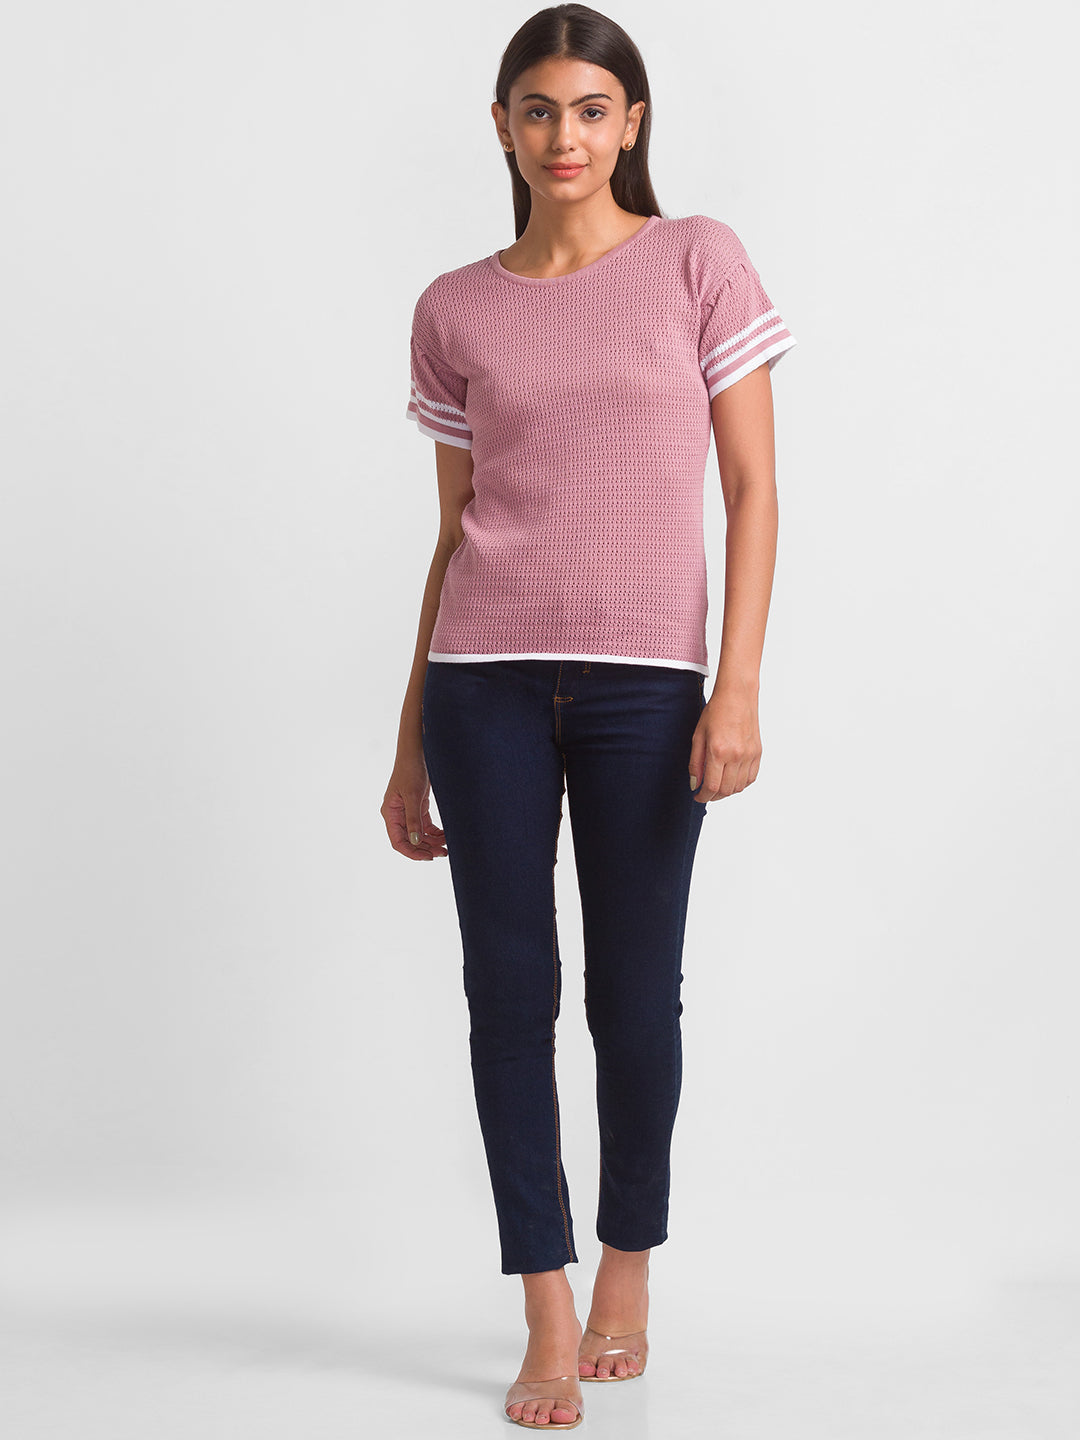 Globus Pink Self Design Tshirt